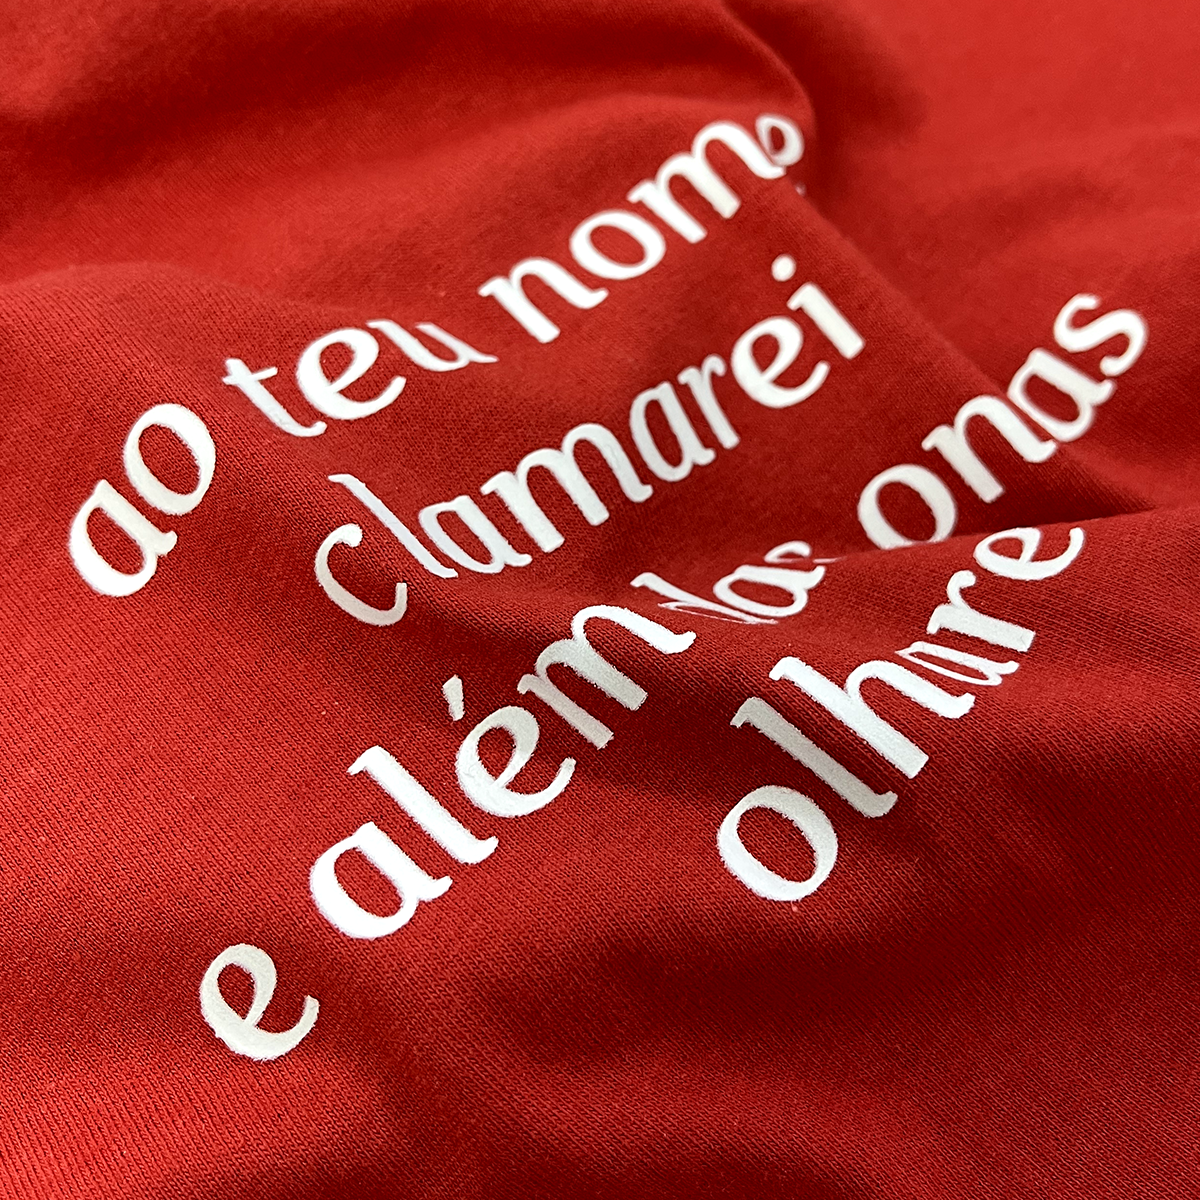 Camiseta Feminina Vermelha Ao Teu Nome Clamarei